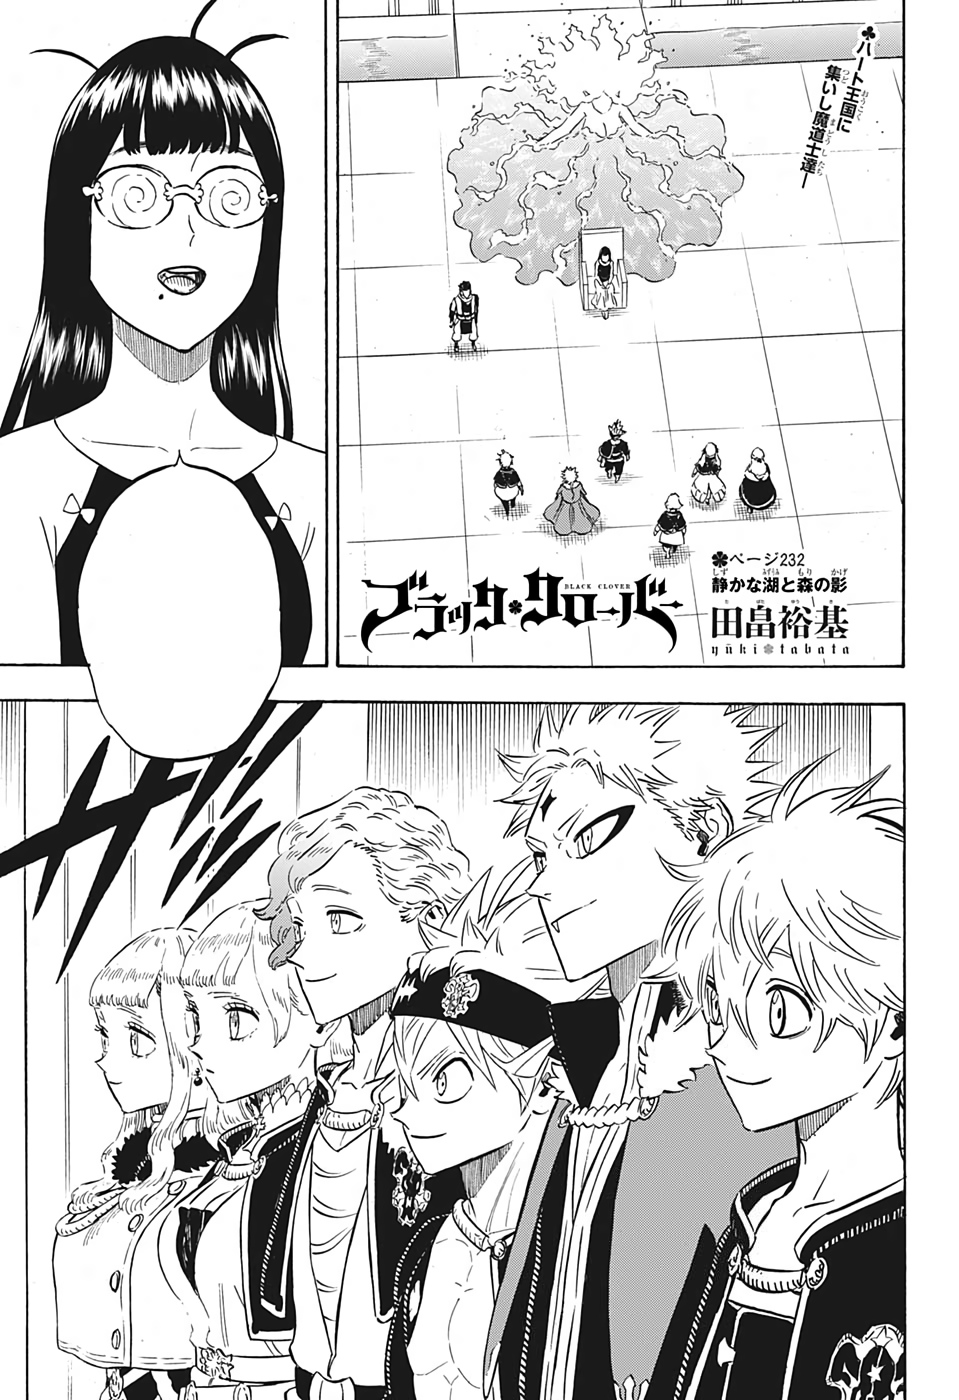 Mimosa x yuno  Black clover anime, Black clover manga, Anime